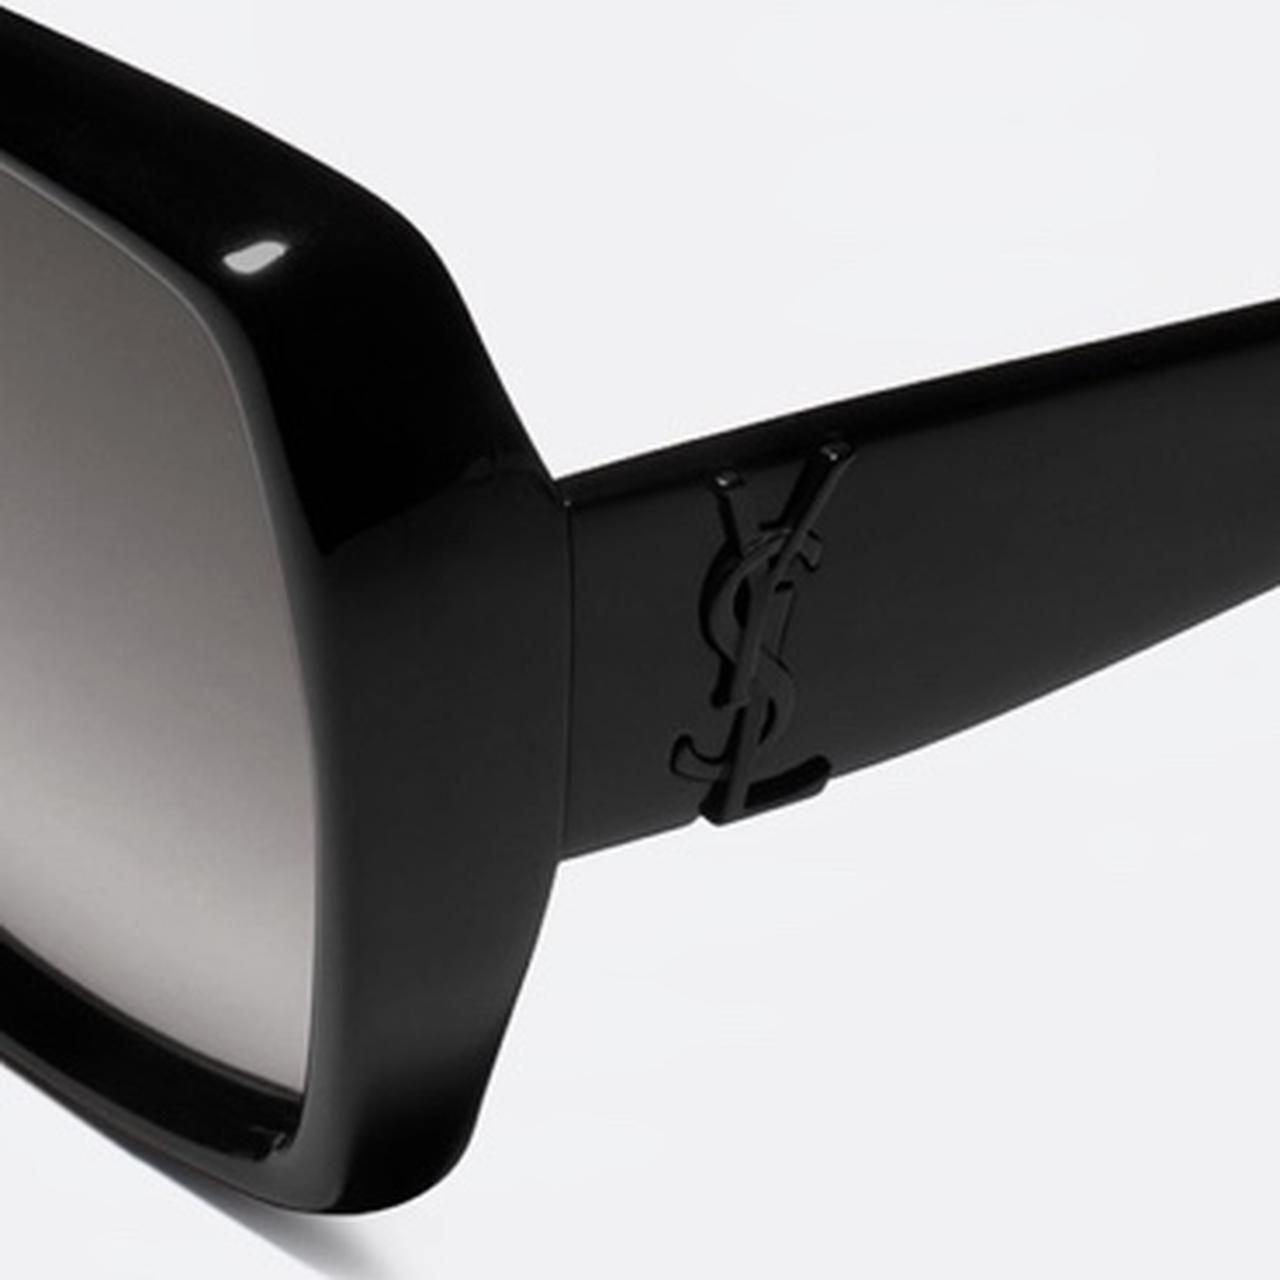 Saint Laurent Monogram Black/Grey Gradient Sunglasses SLM104001